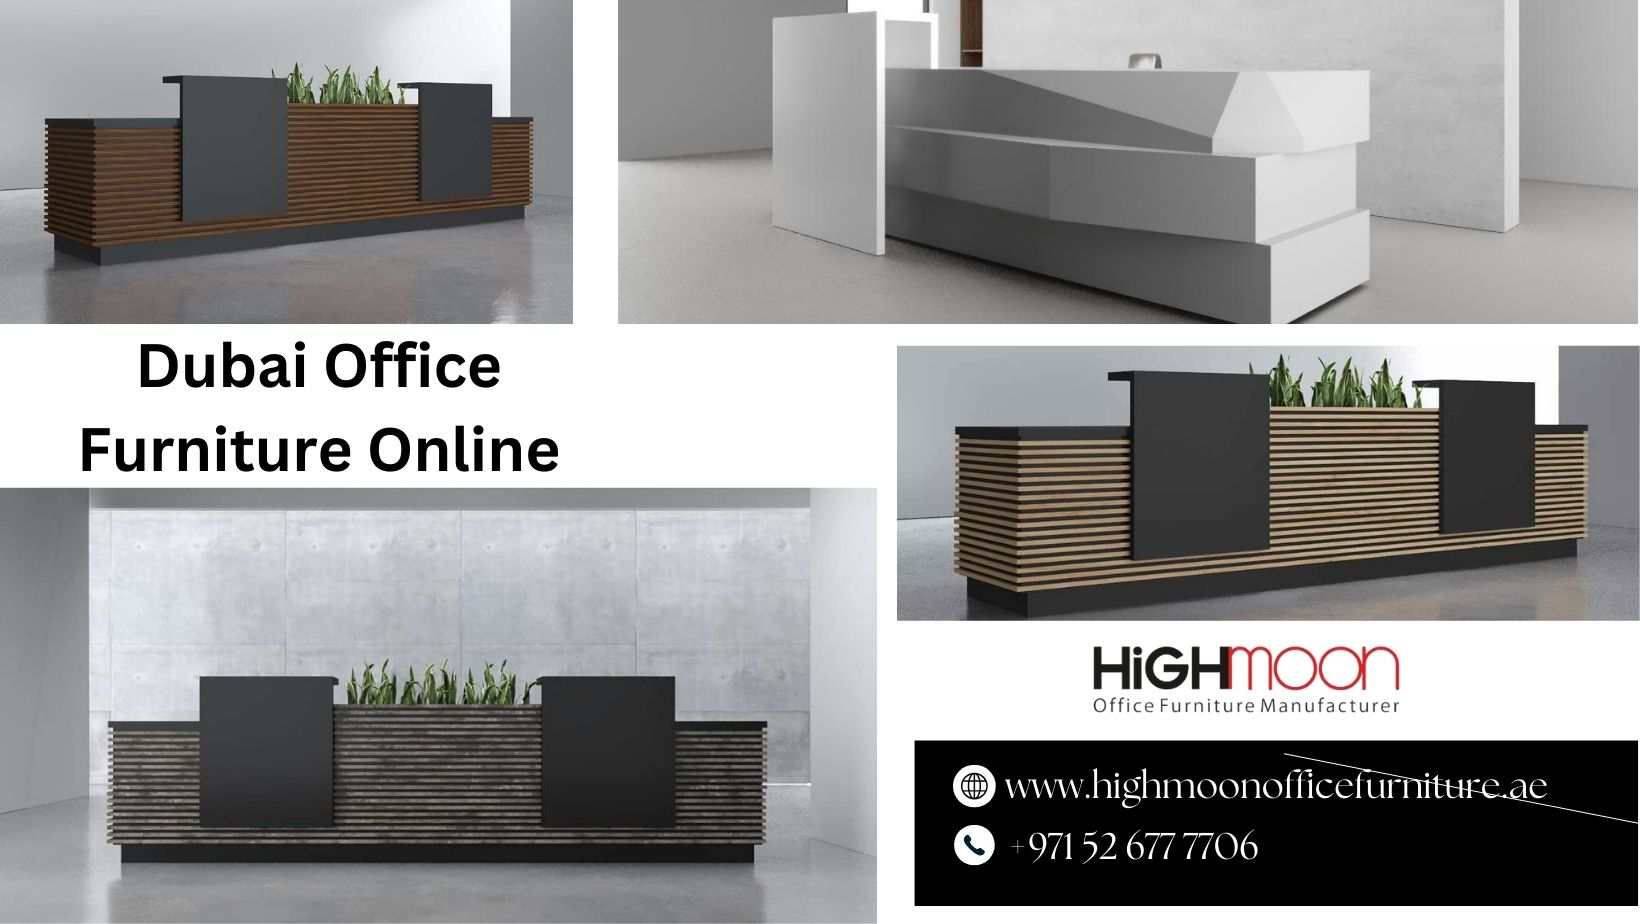 Dubai Office Furniture Online.